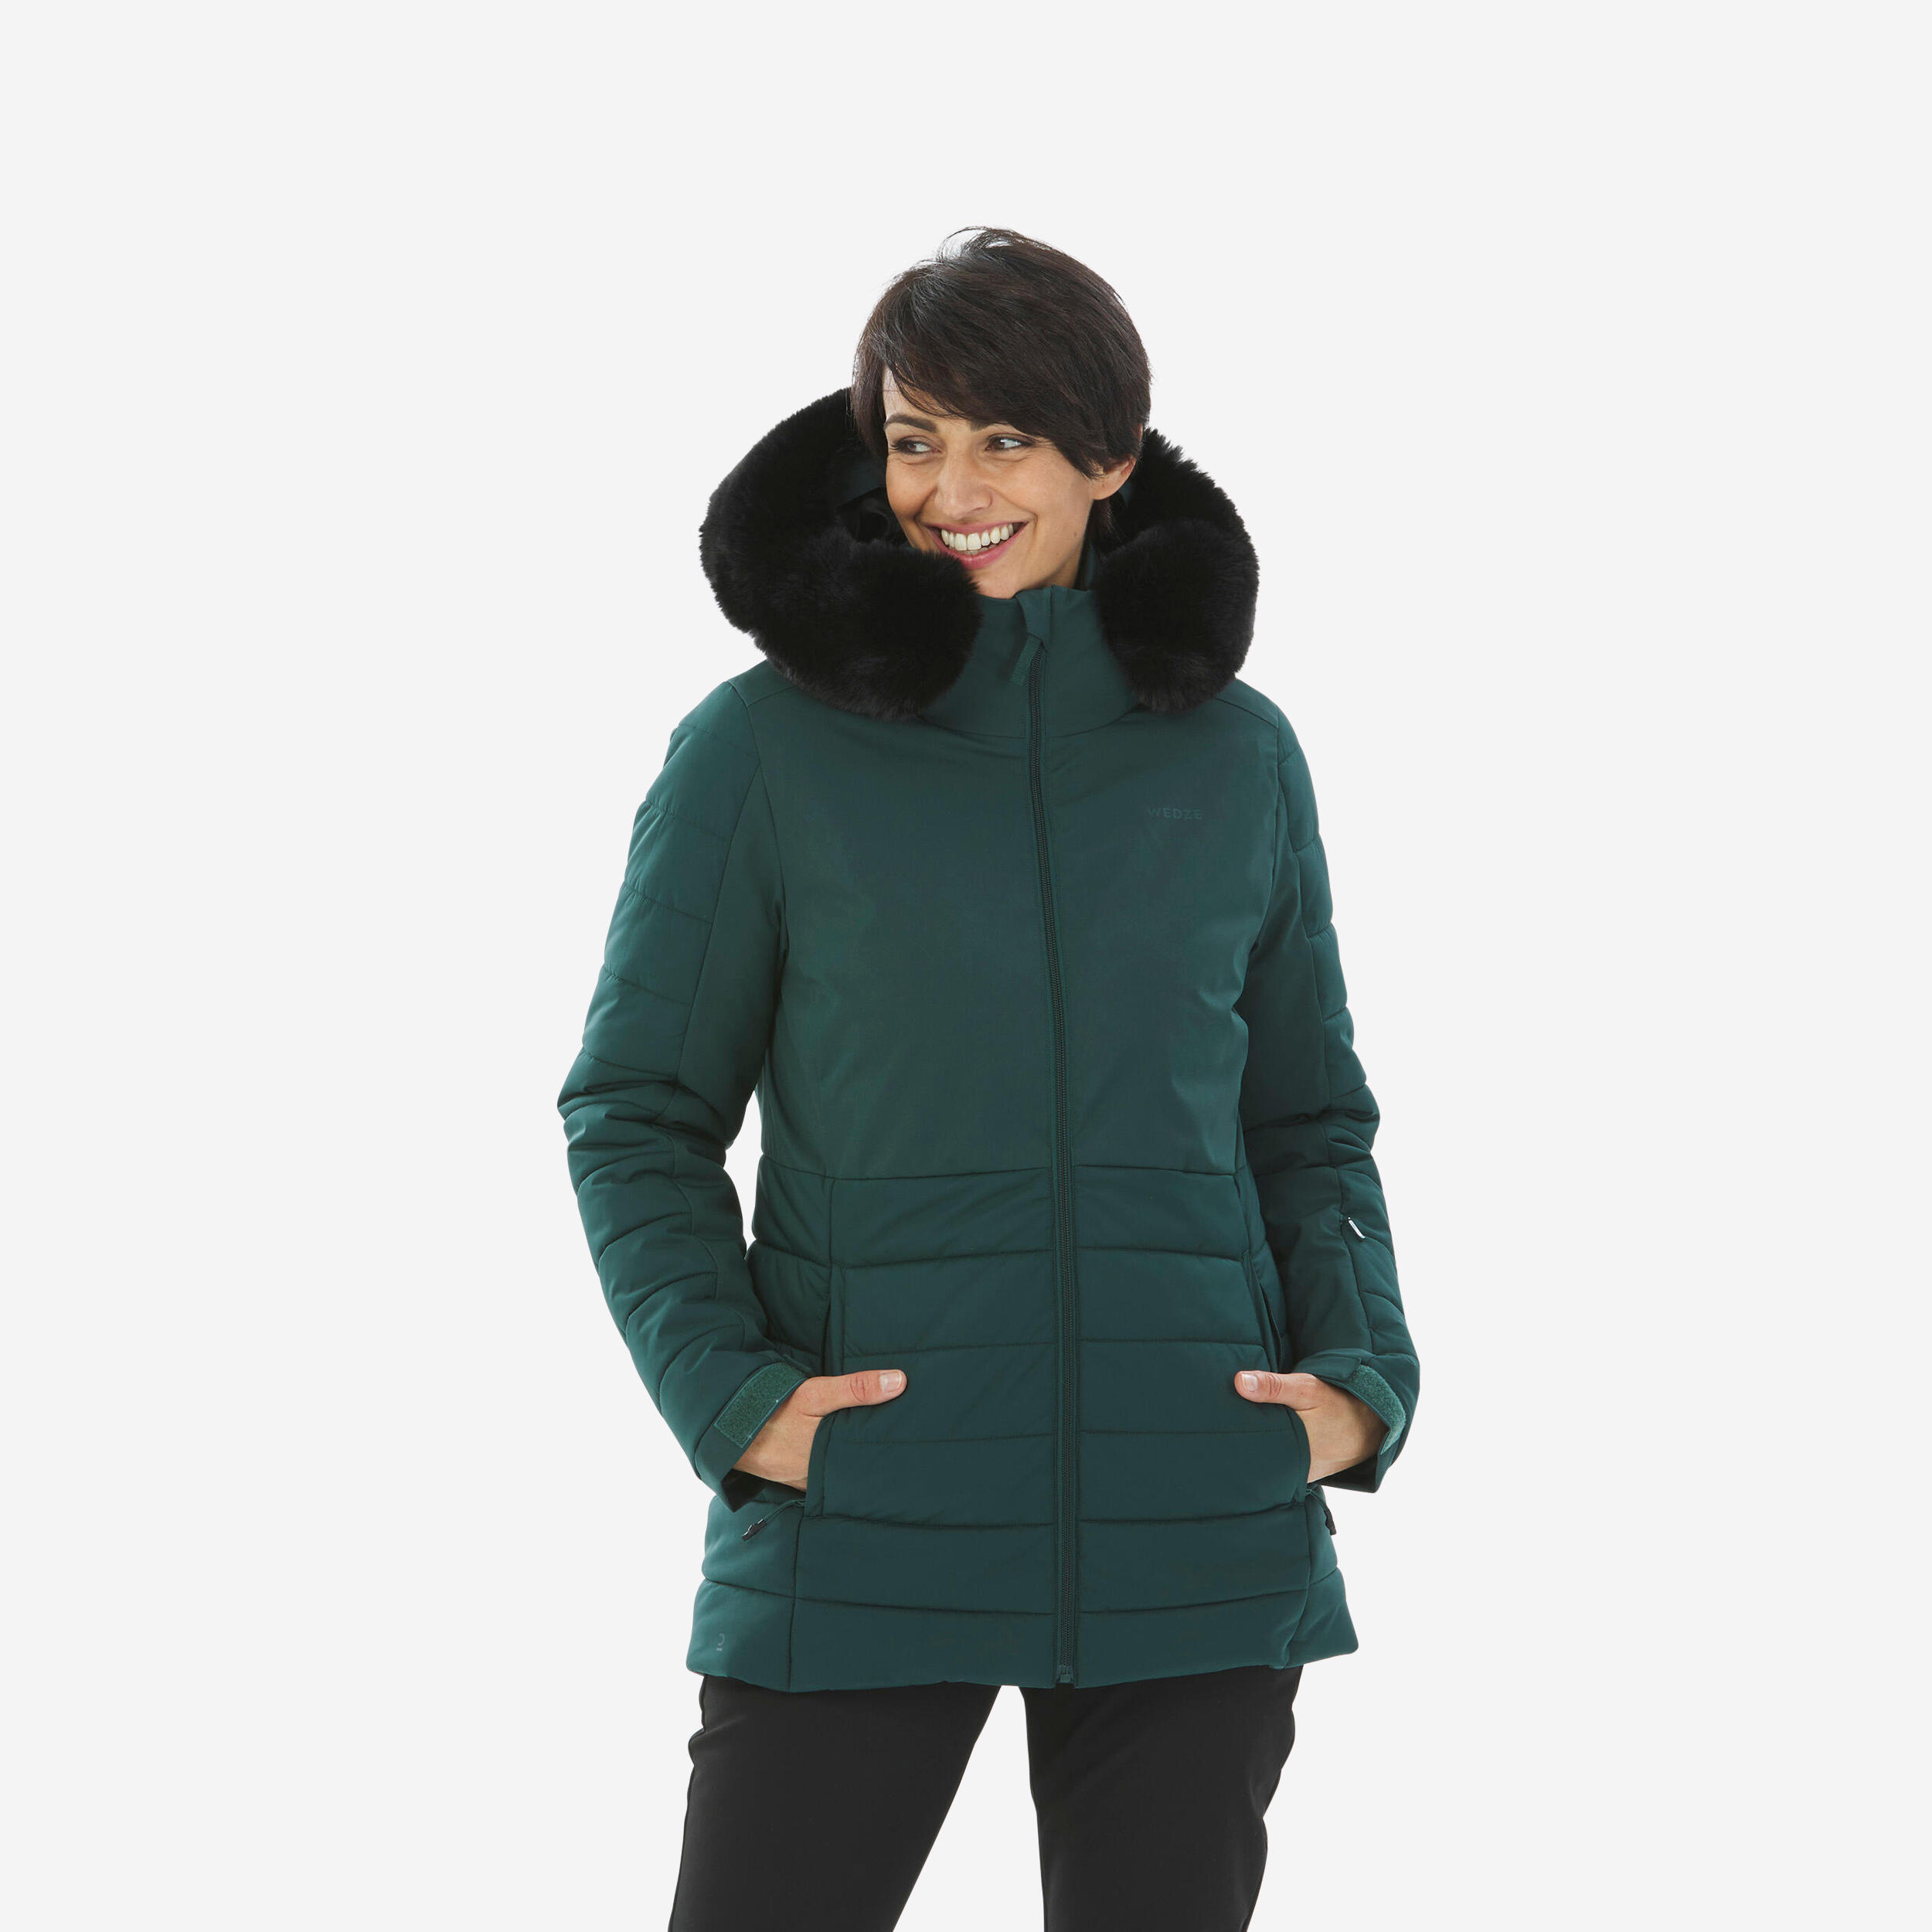 WEDZE Women's Mid-Length Warm Ski Jacket 100 - Green